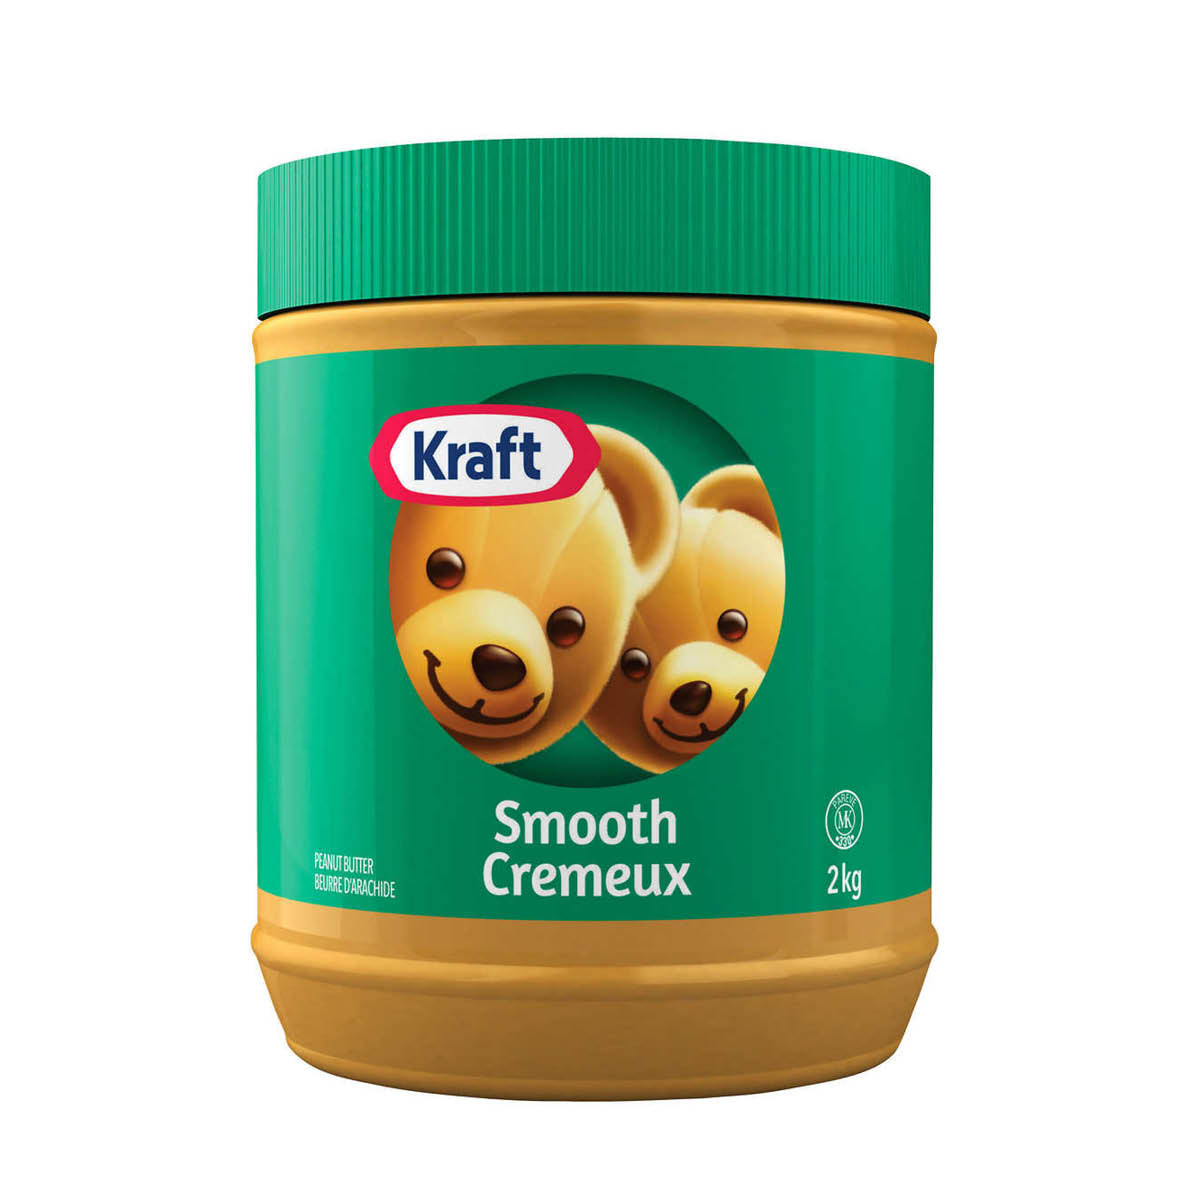 Kraft Smooth Peanut Butter, 2kg